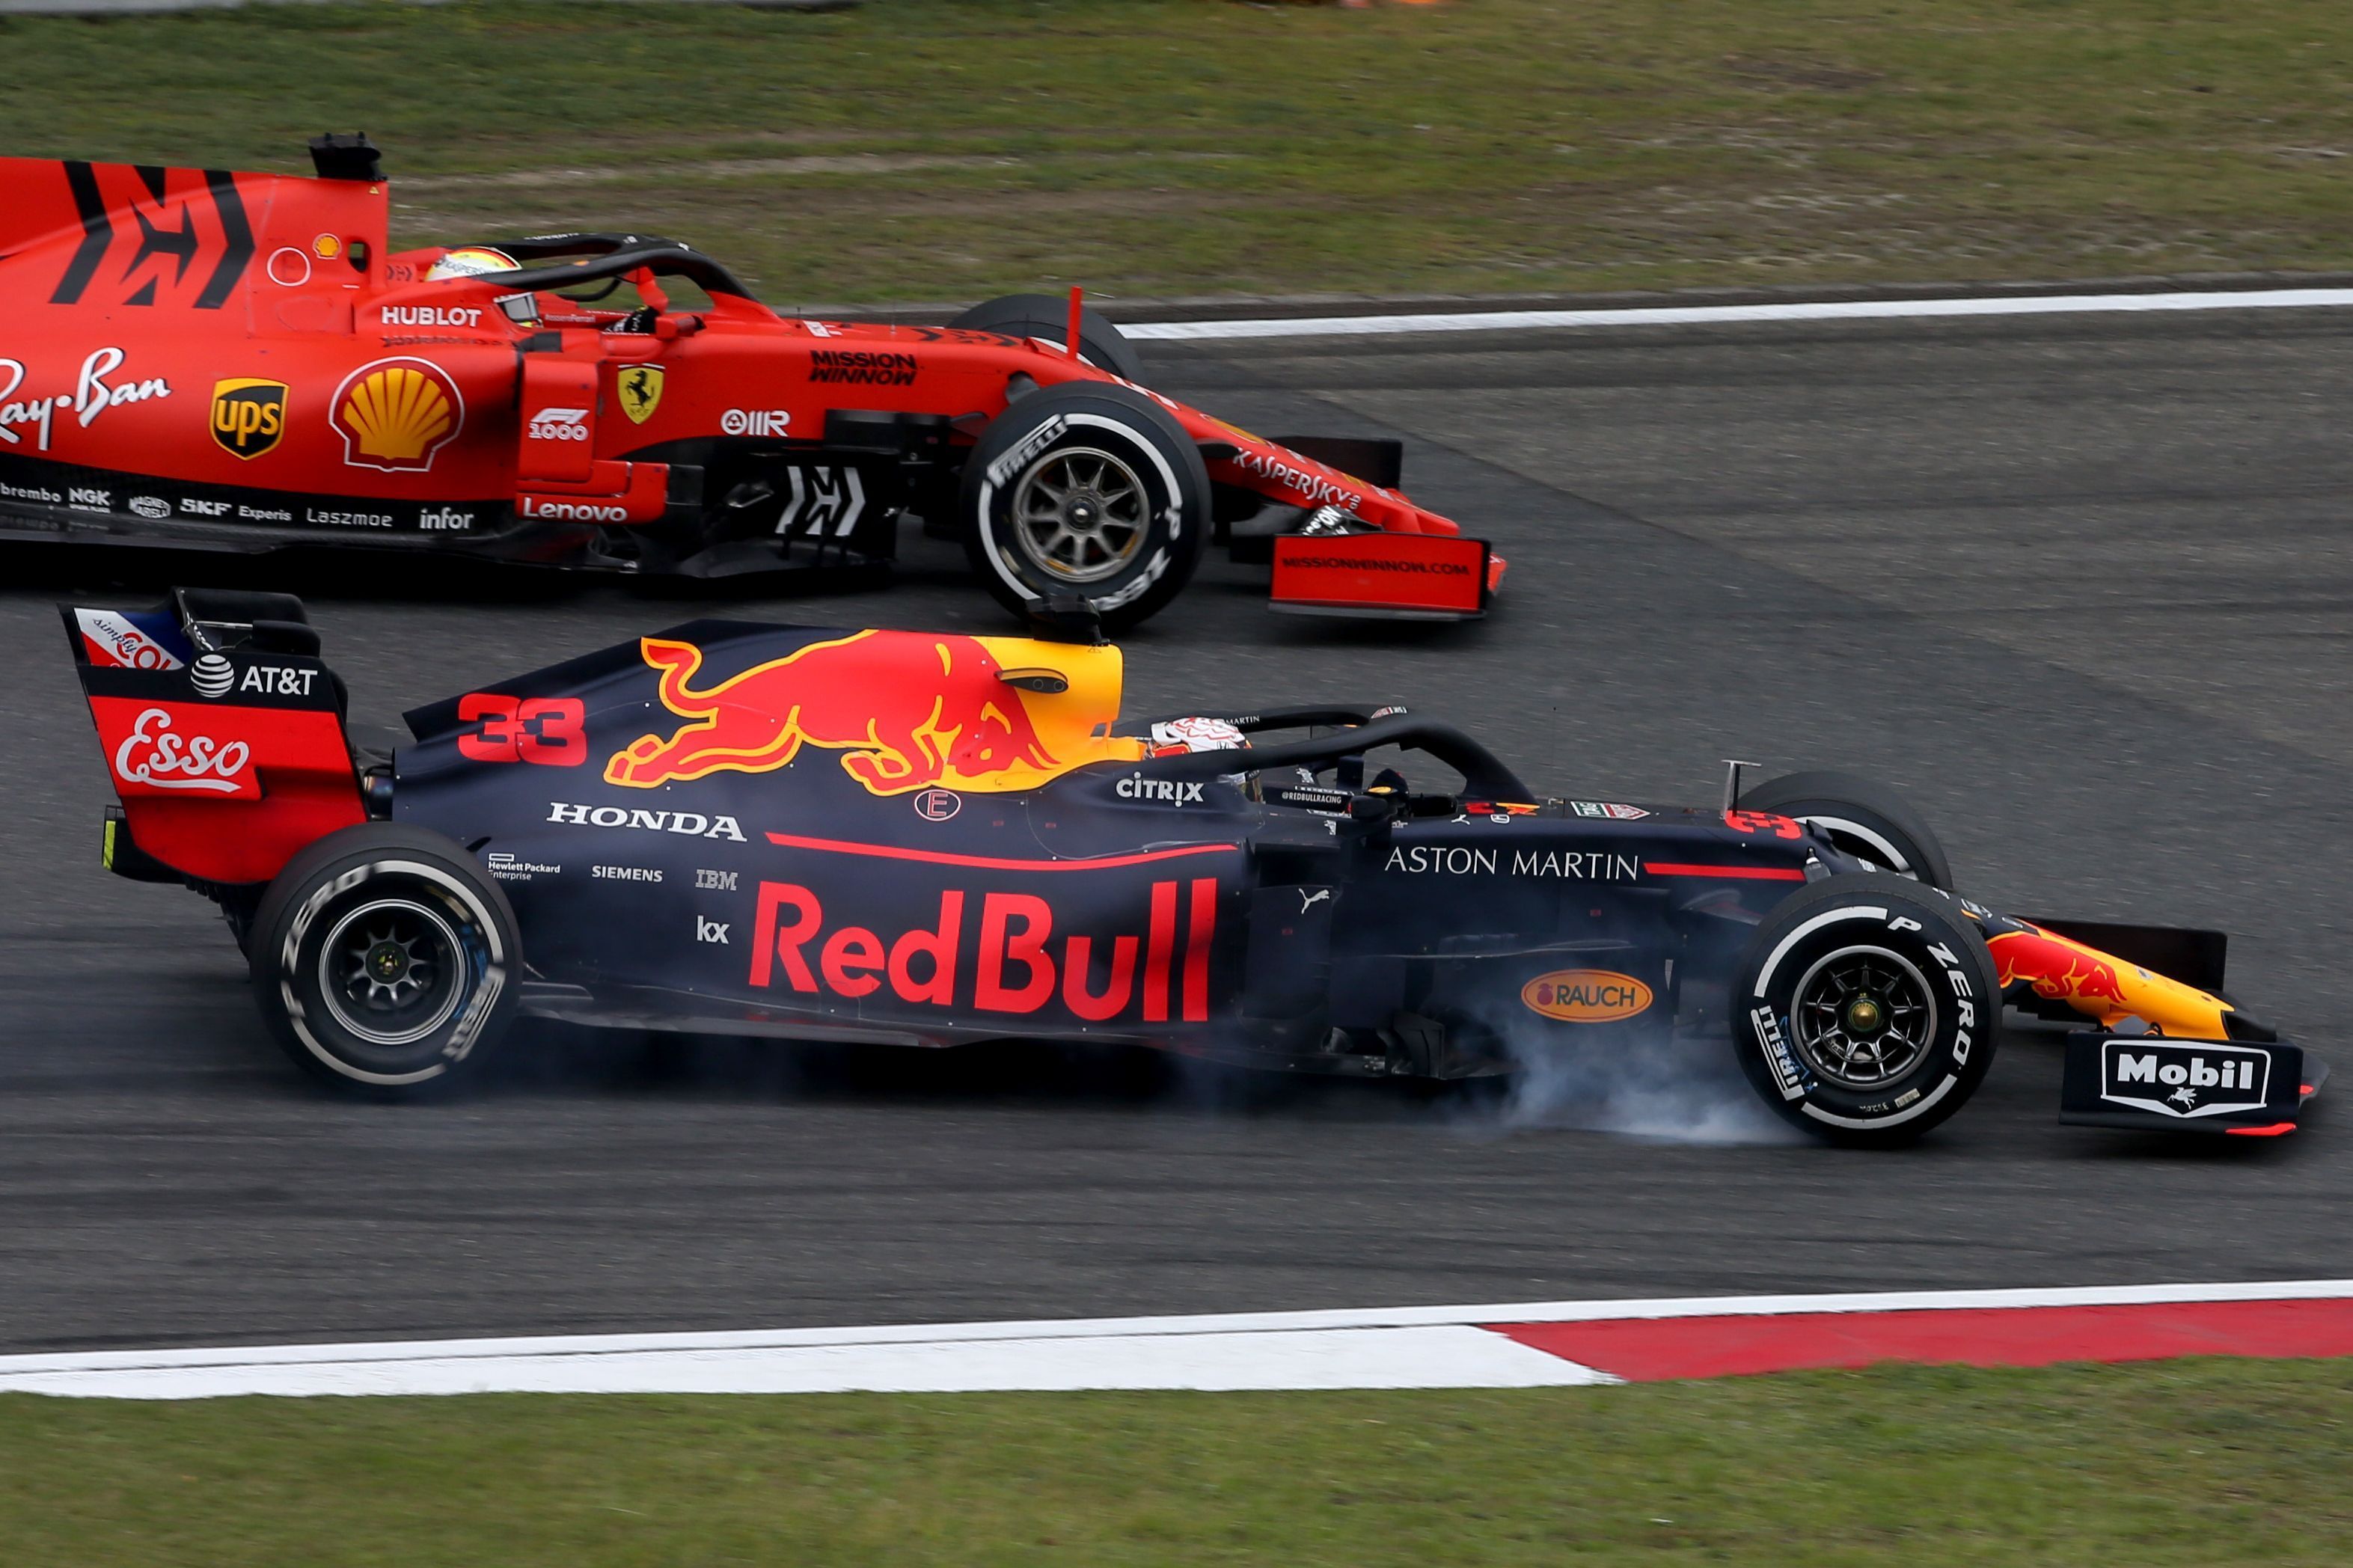 Max Verstappen battling Ferrari in F1 Chinese GP